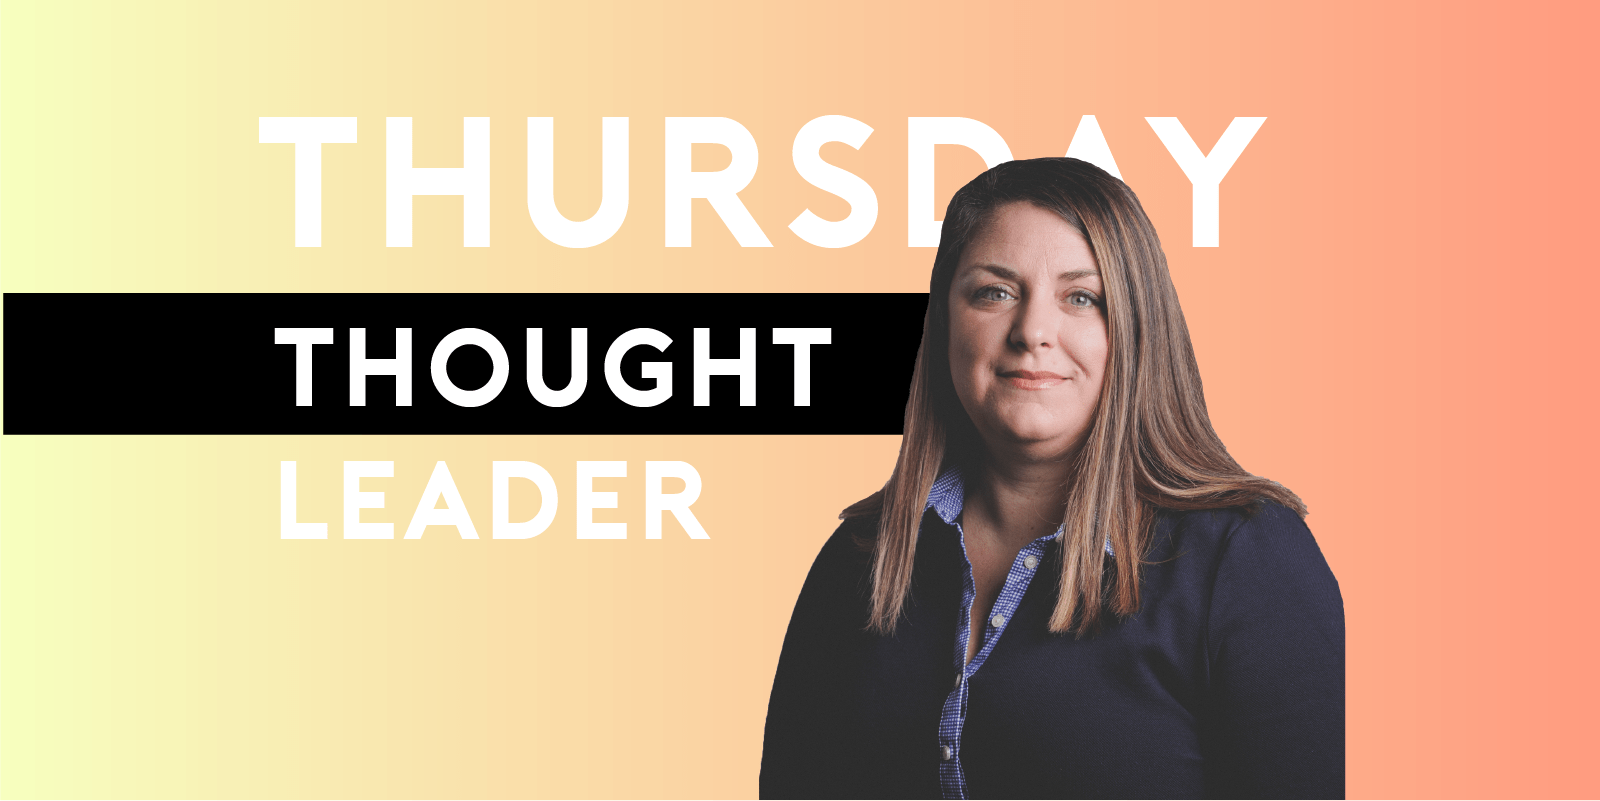 Kristen Peed of CBIZ and RIMS is LegalNet's Thursday Thought Leader